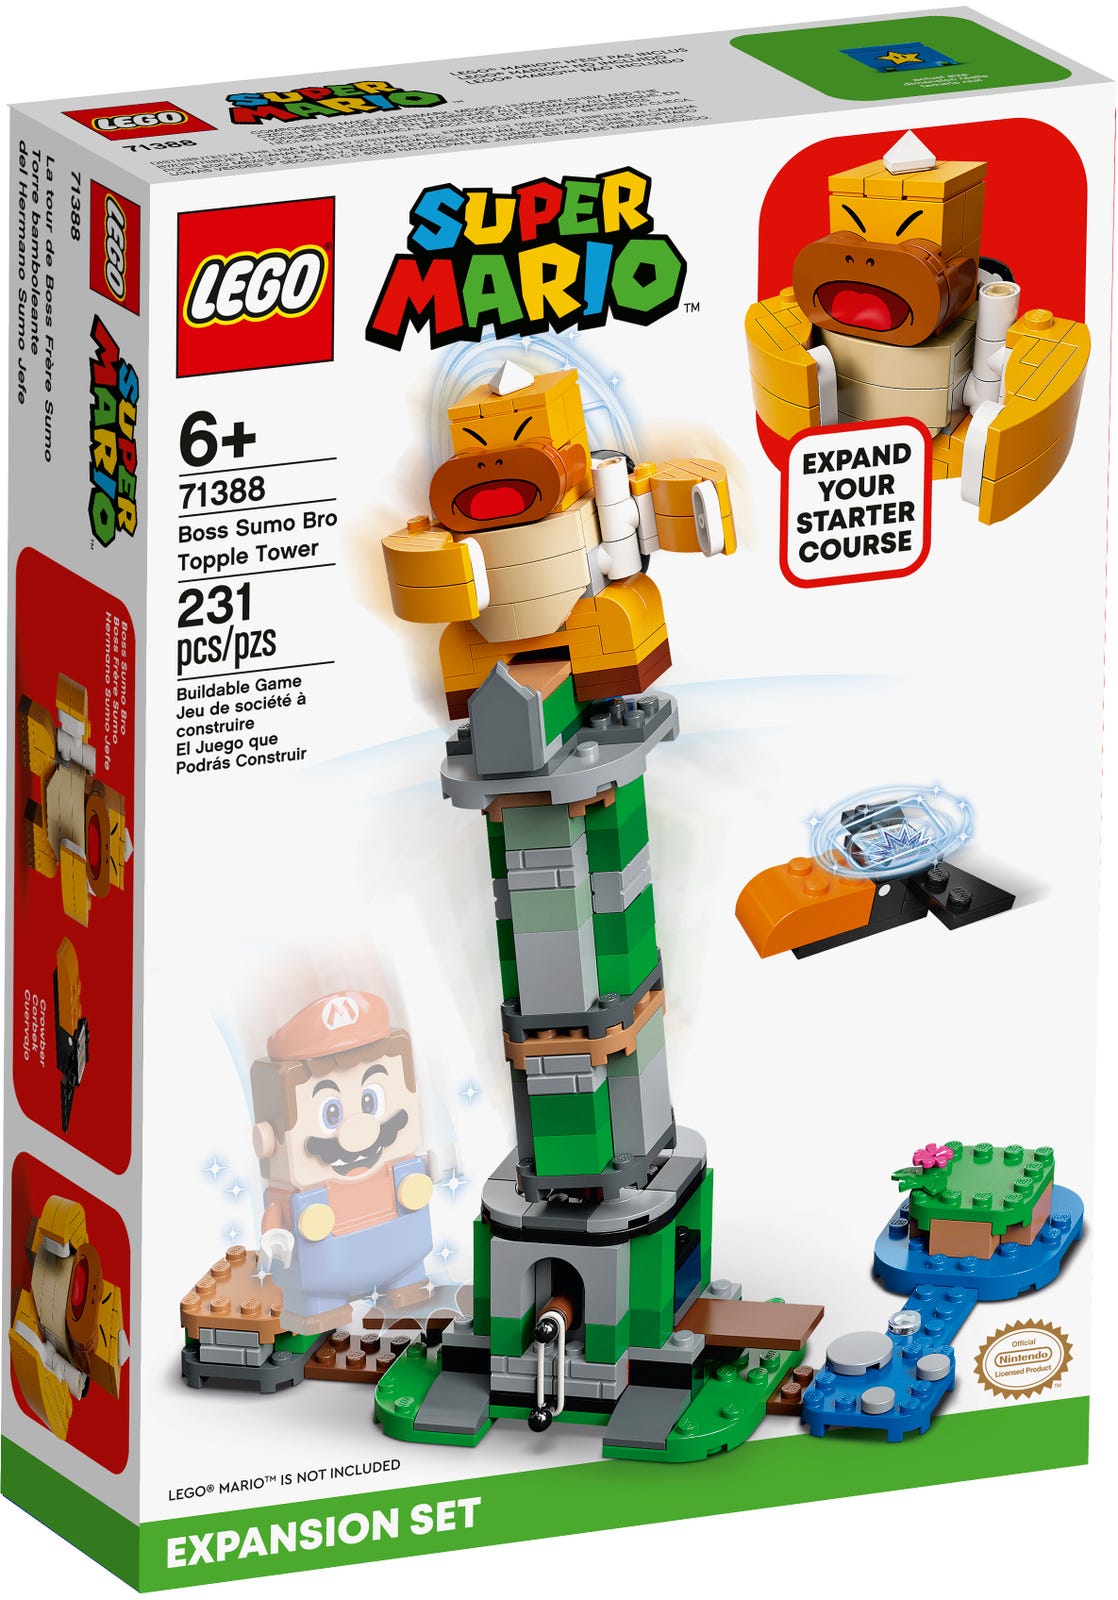 Lego Super Mario Boss Sumo Bro Topple Tower Expansion Set 71388